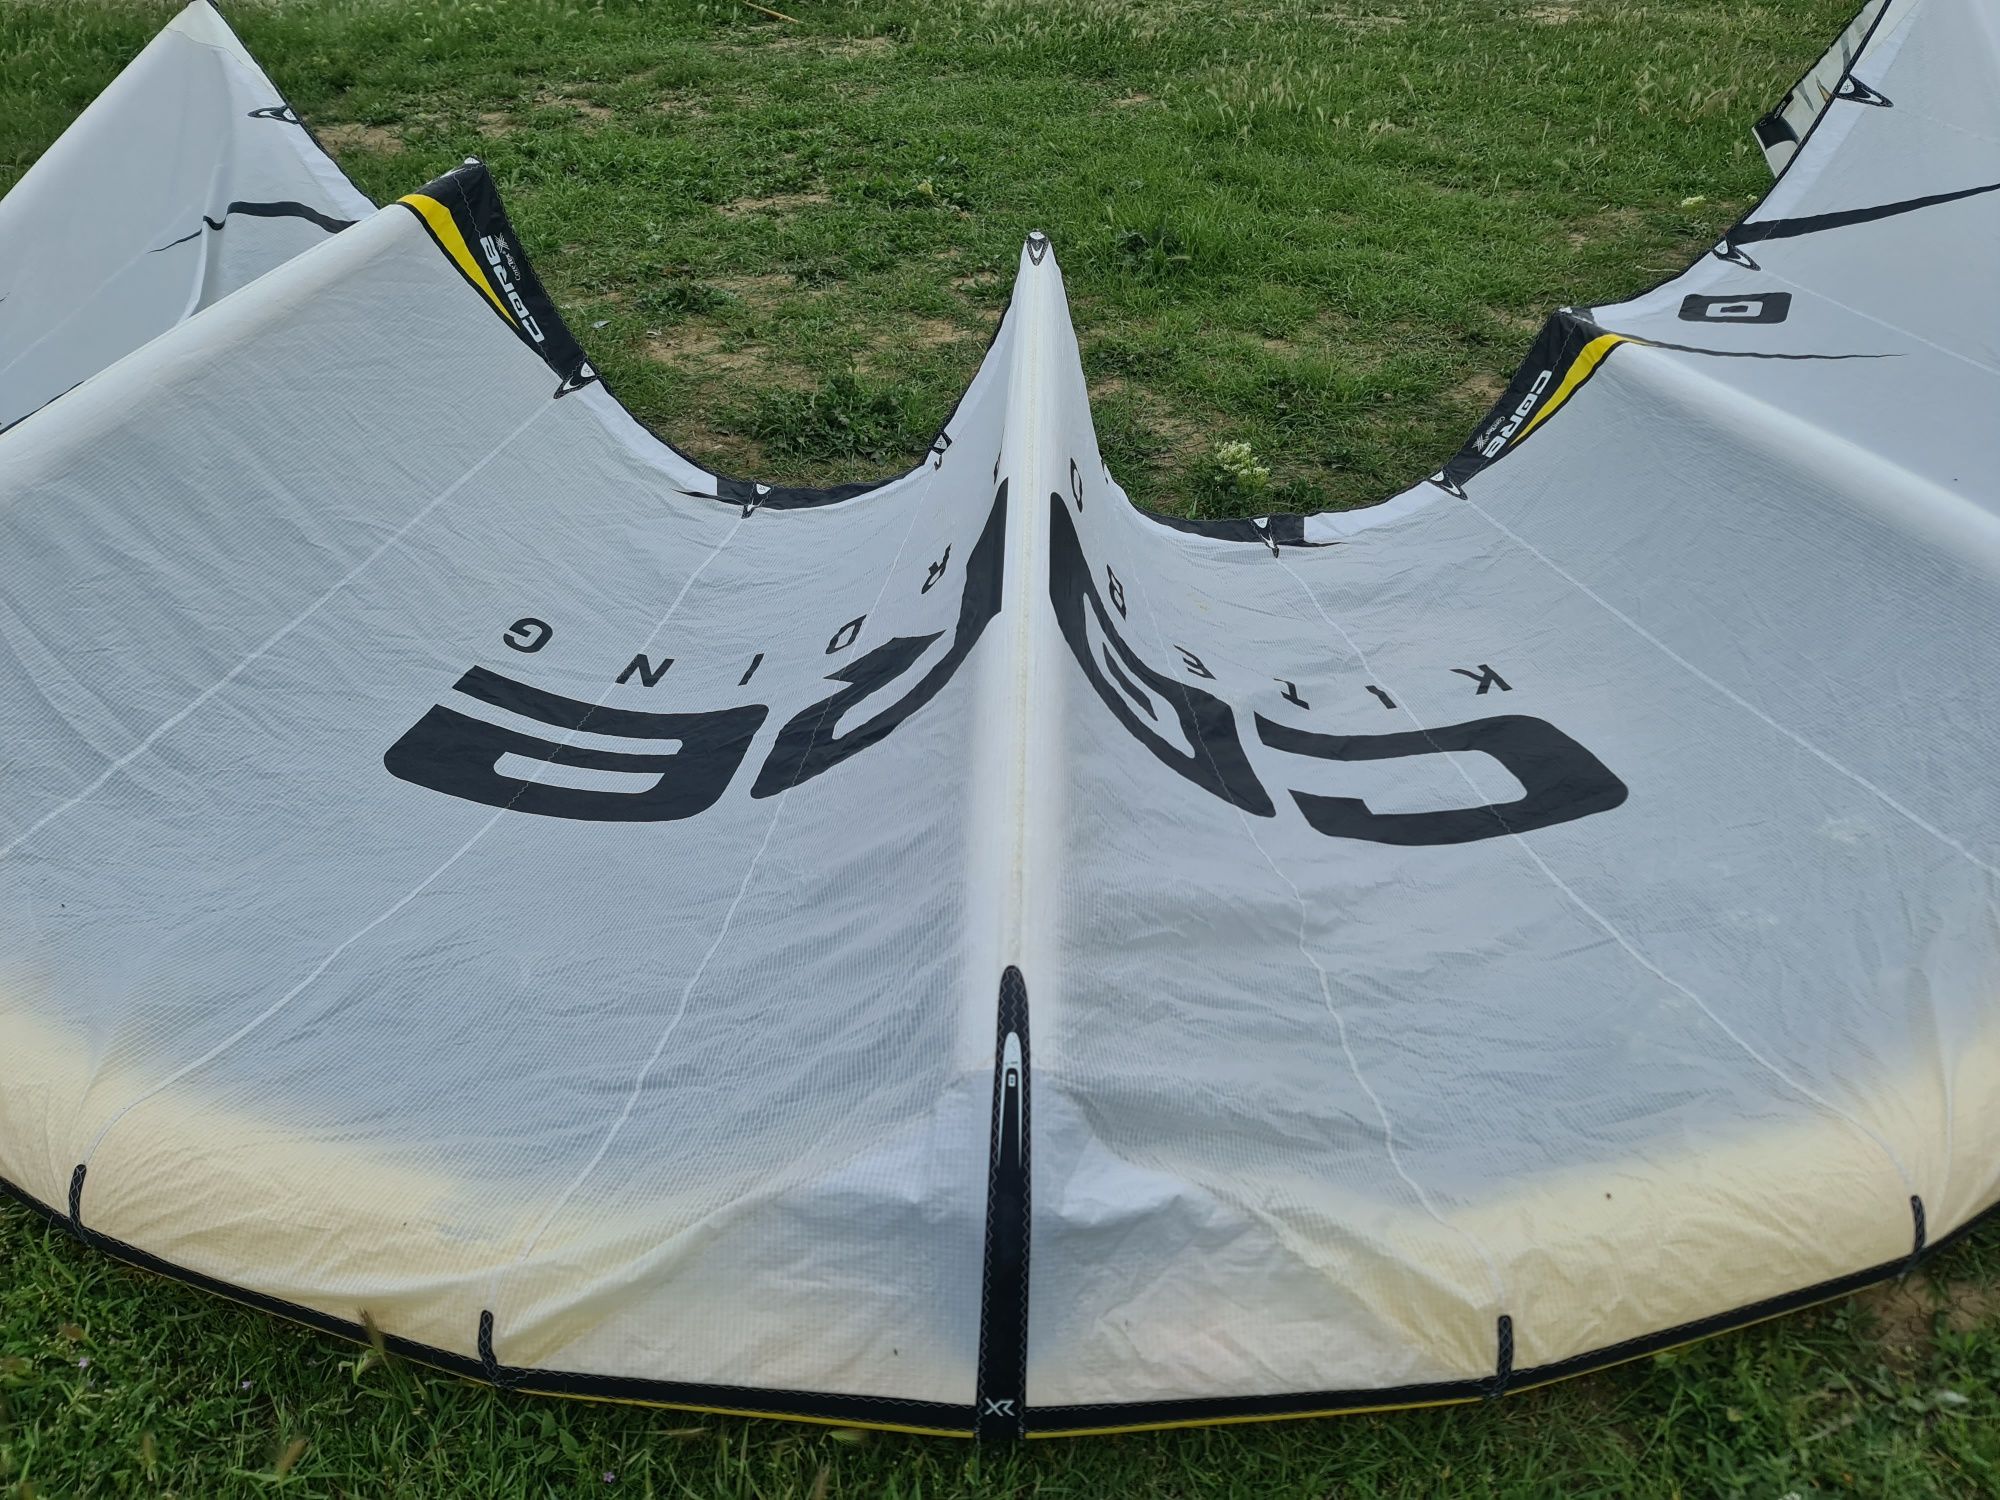 Kite core xr4 13.5m cu bara si sac kiteboarding kitesurfing